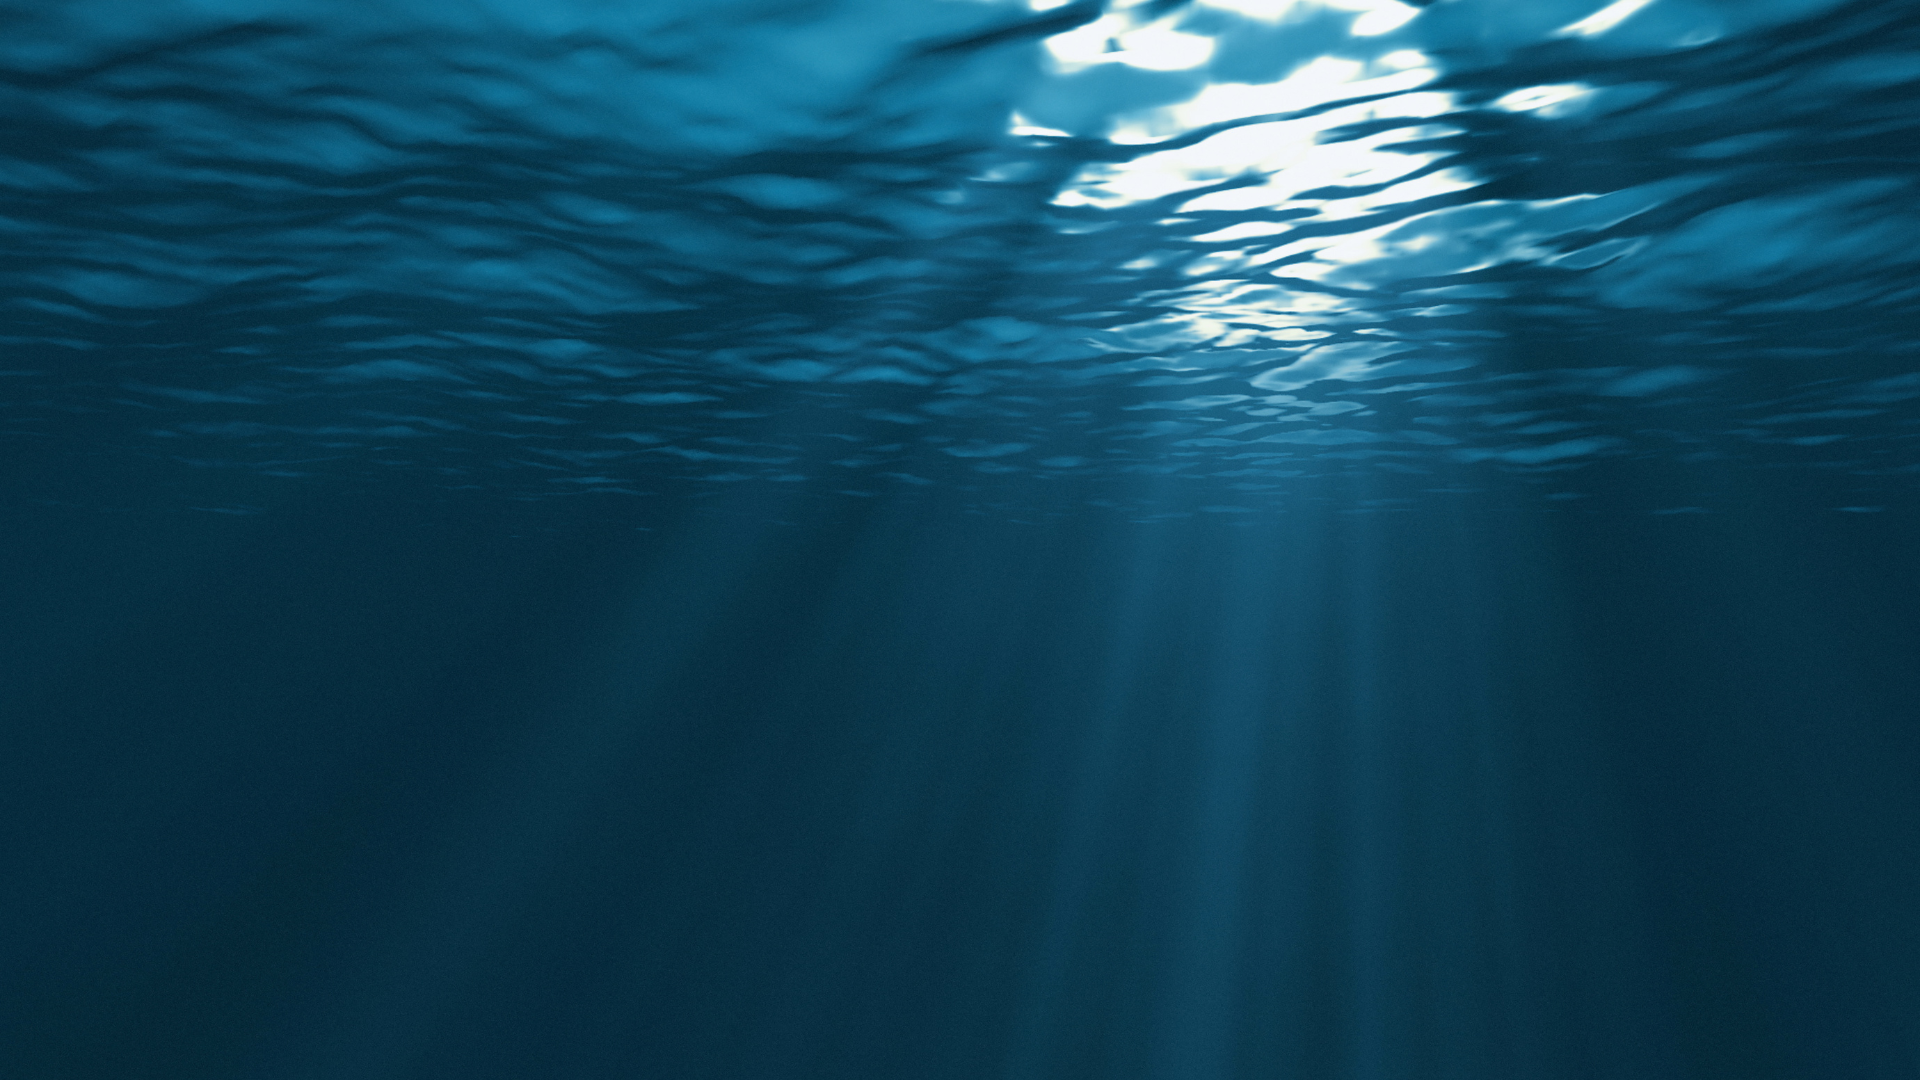 Deep ocean water with slight glimmer of light